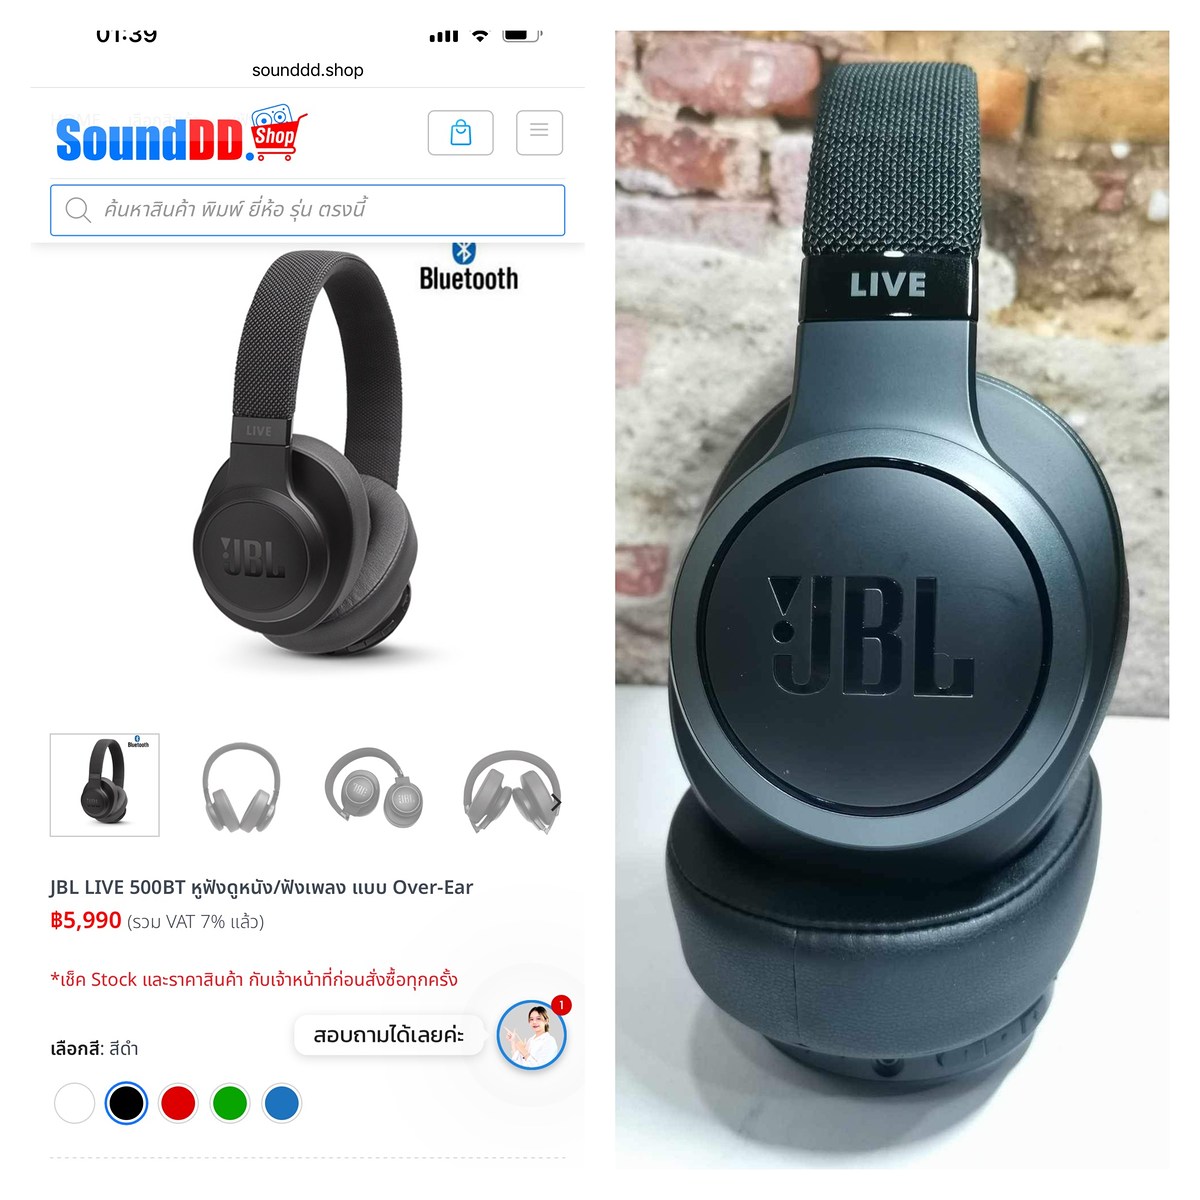 JBL LIVE 500BT หูฟังไร้สายแบบ Over-Ear เบสแน่น รองรับ Google Assistant และ Voice Assistant สั่งการด้